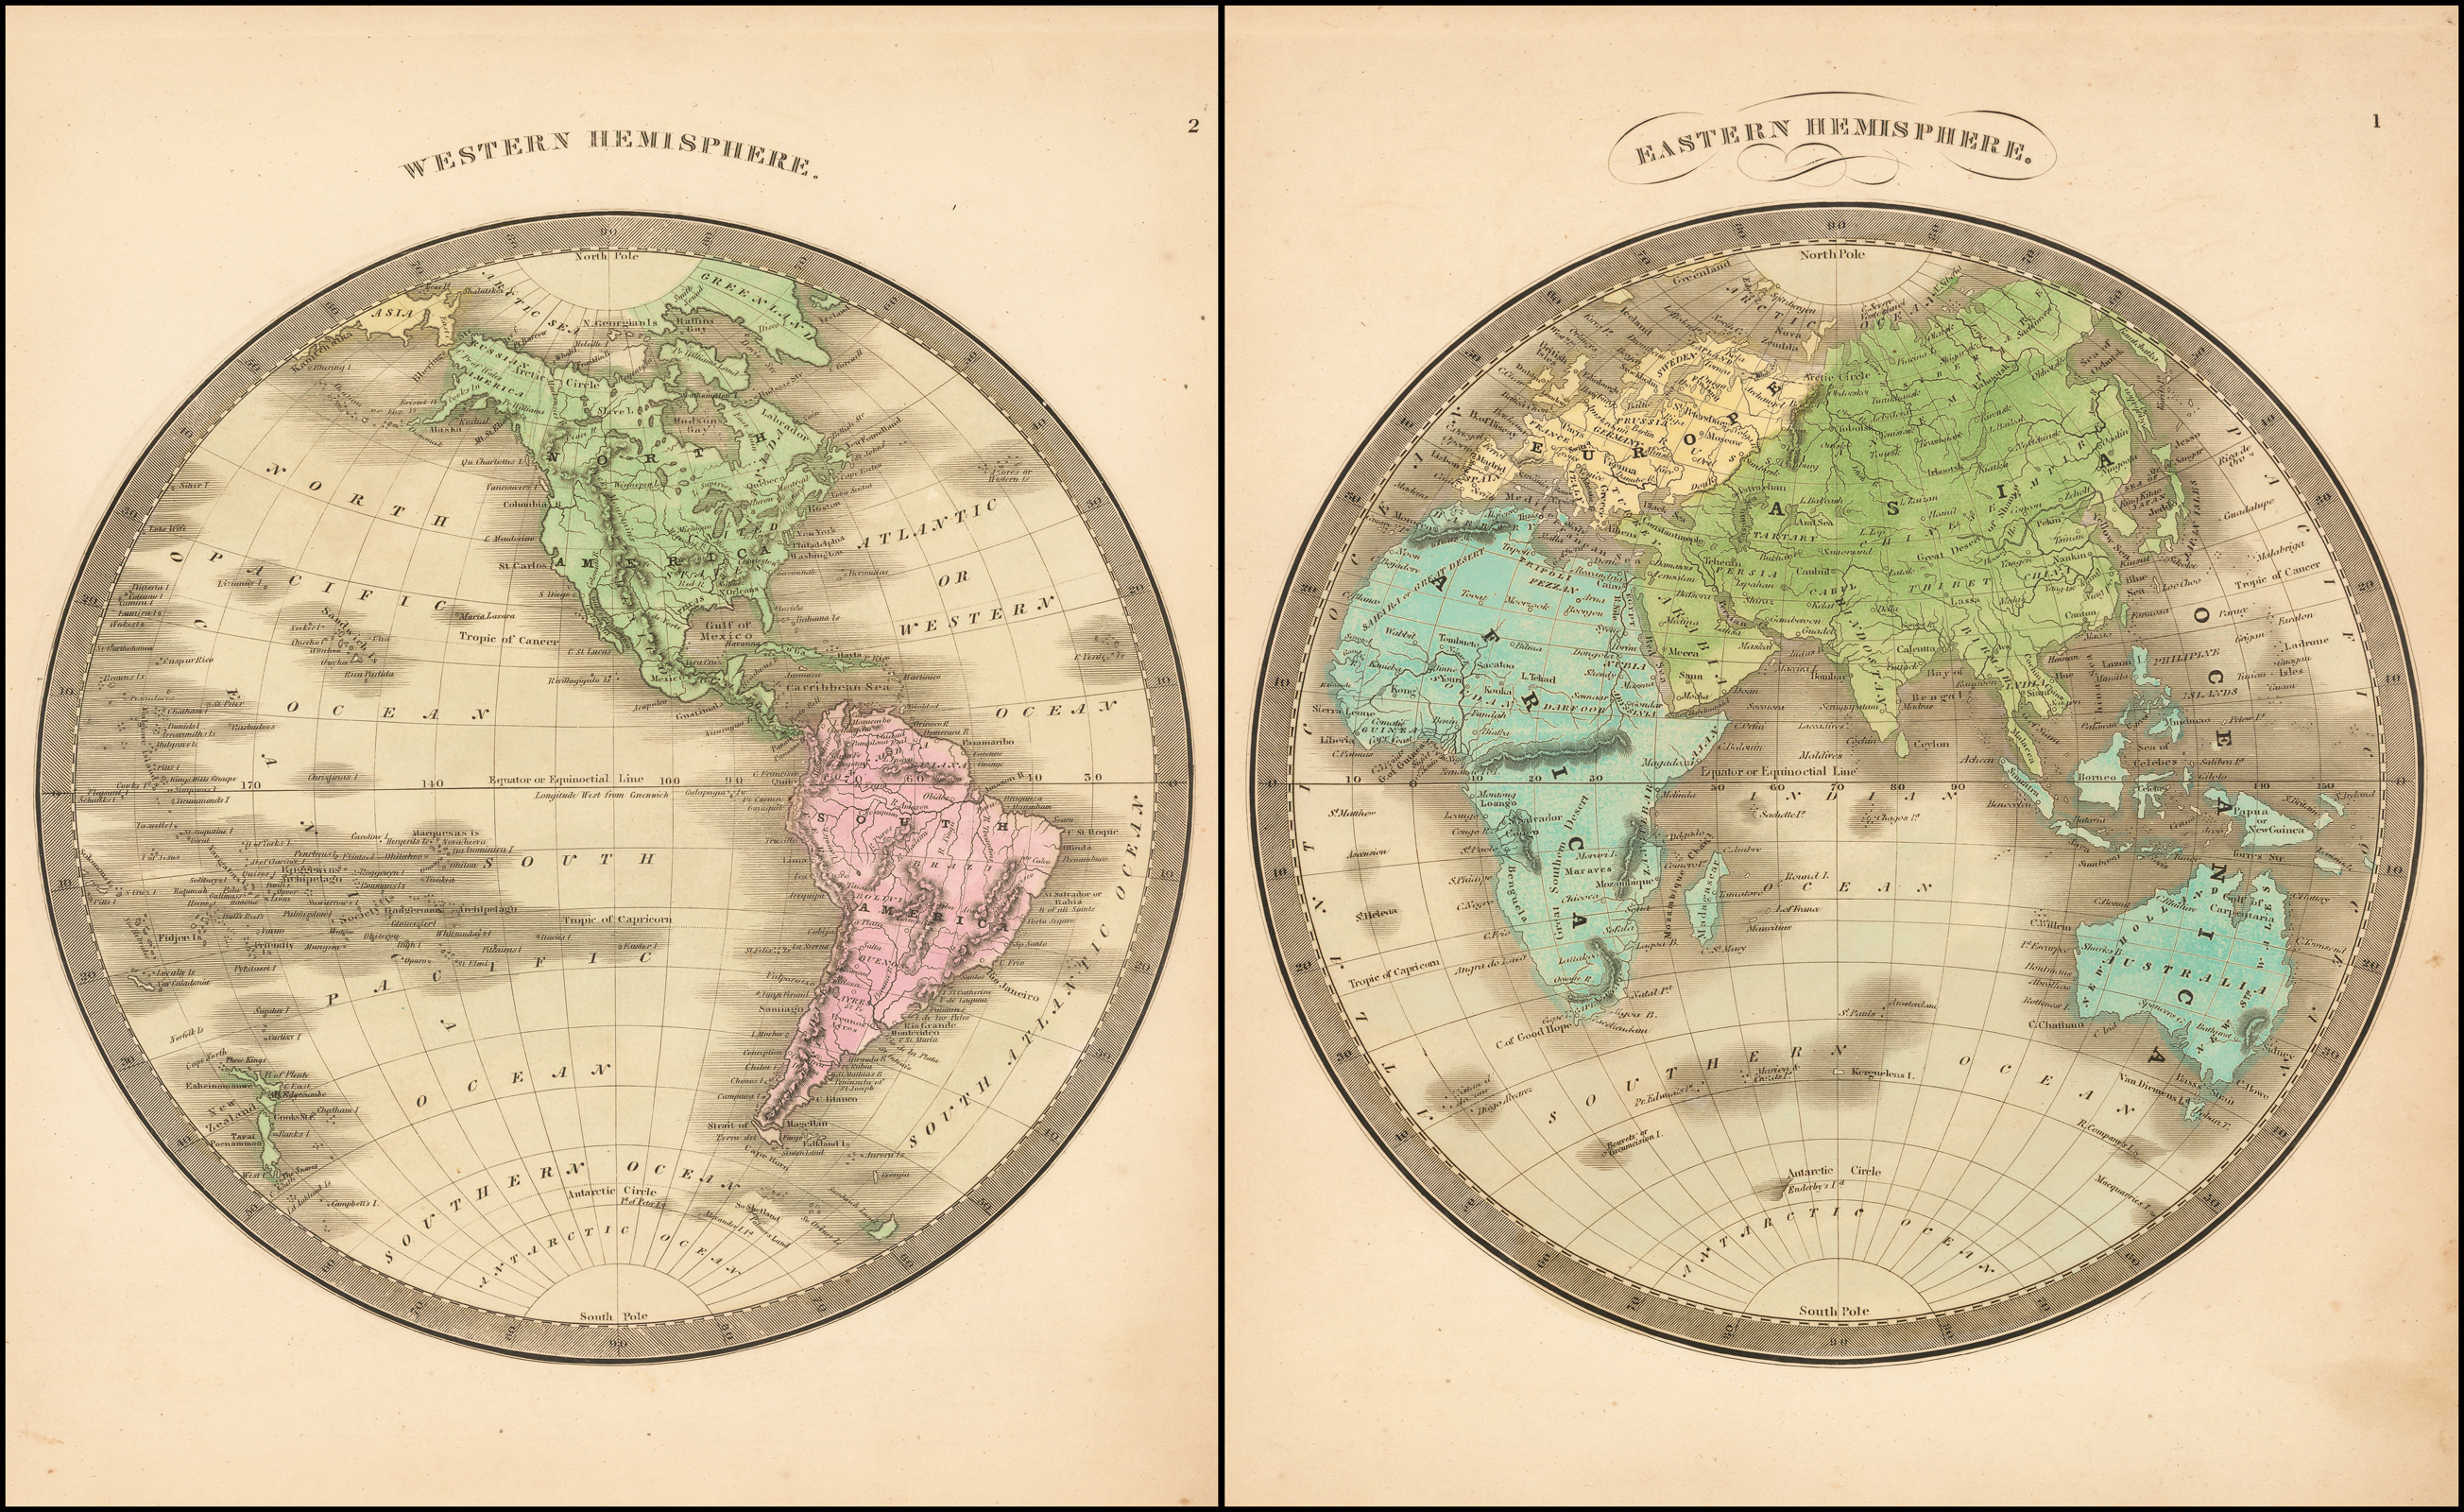 Western Hemisphere and Eastern Hemisphere - Barry Lawrence Ruderman